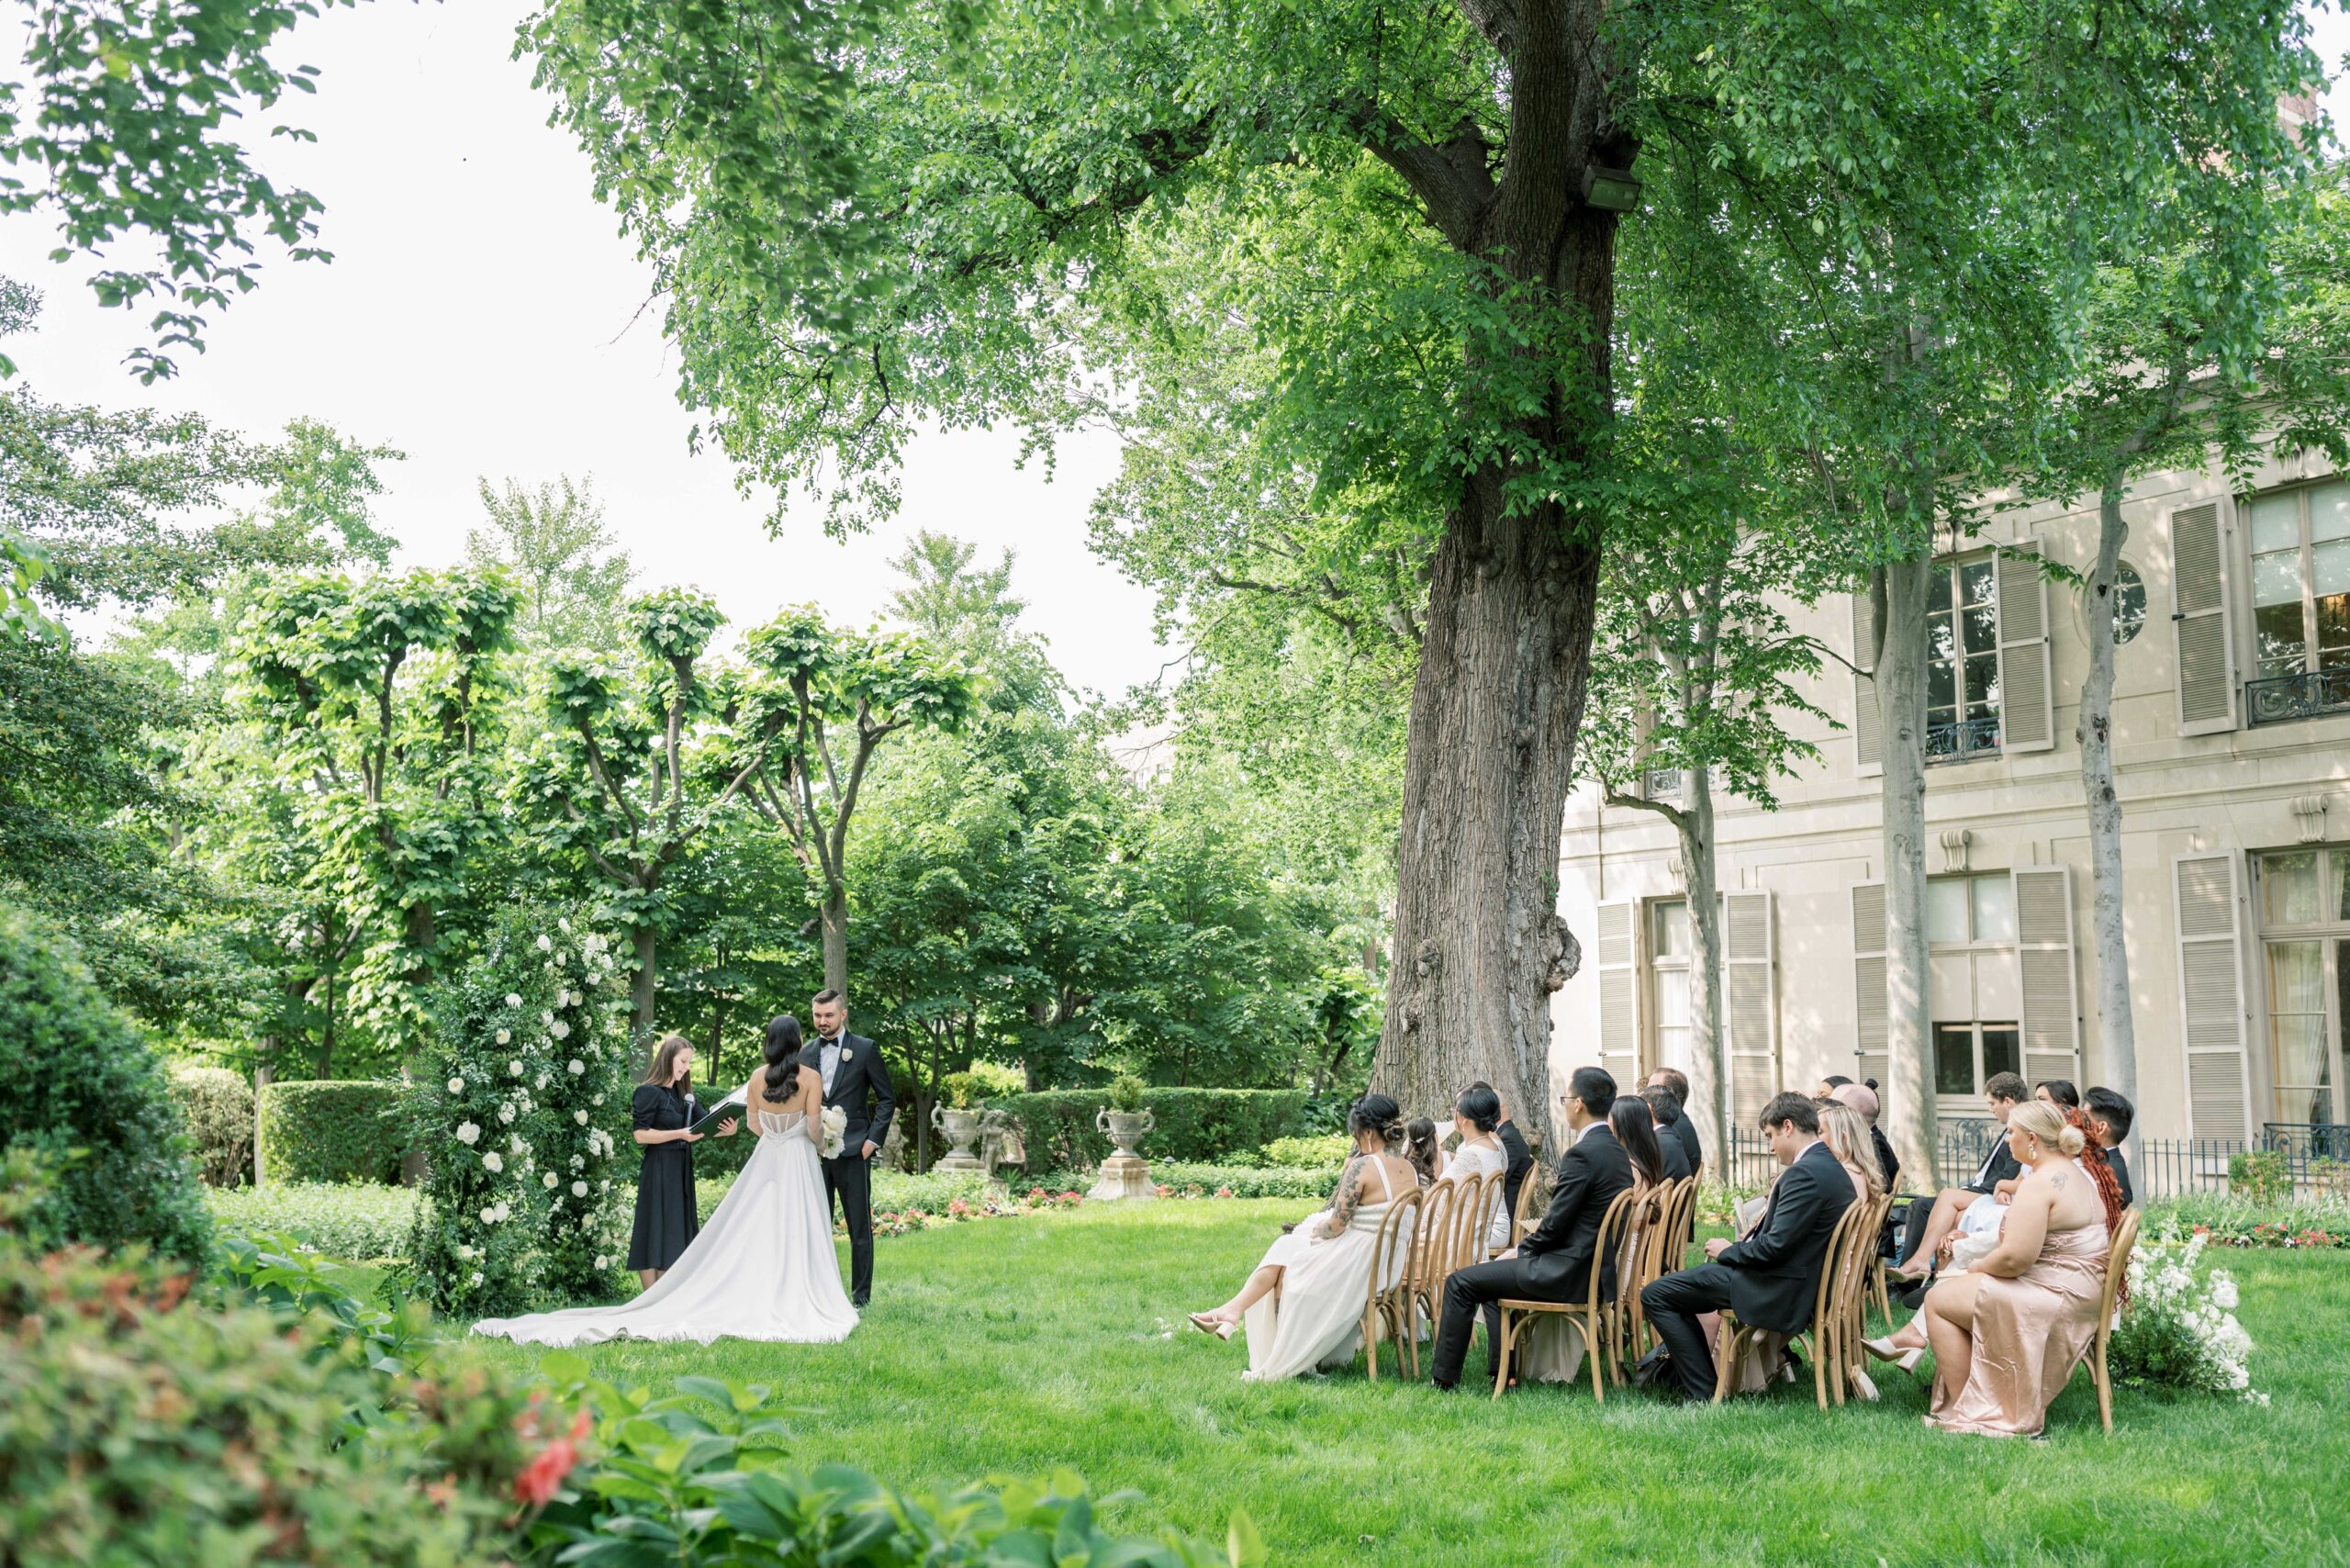 Meridian House wedding photography in Washington, DC featuring an al fresco dinner.